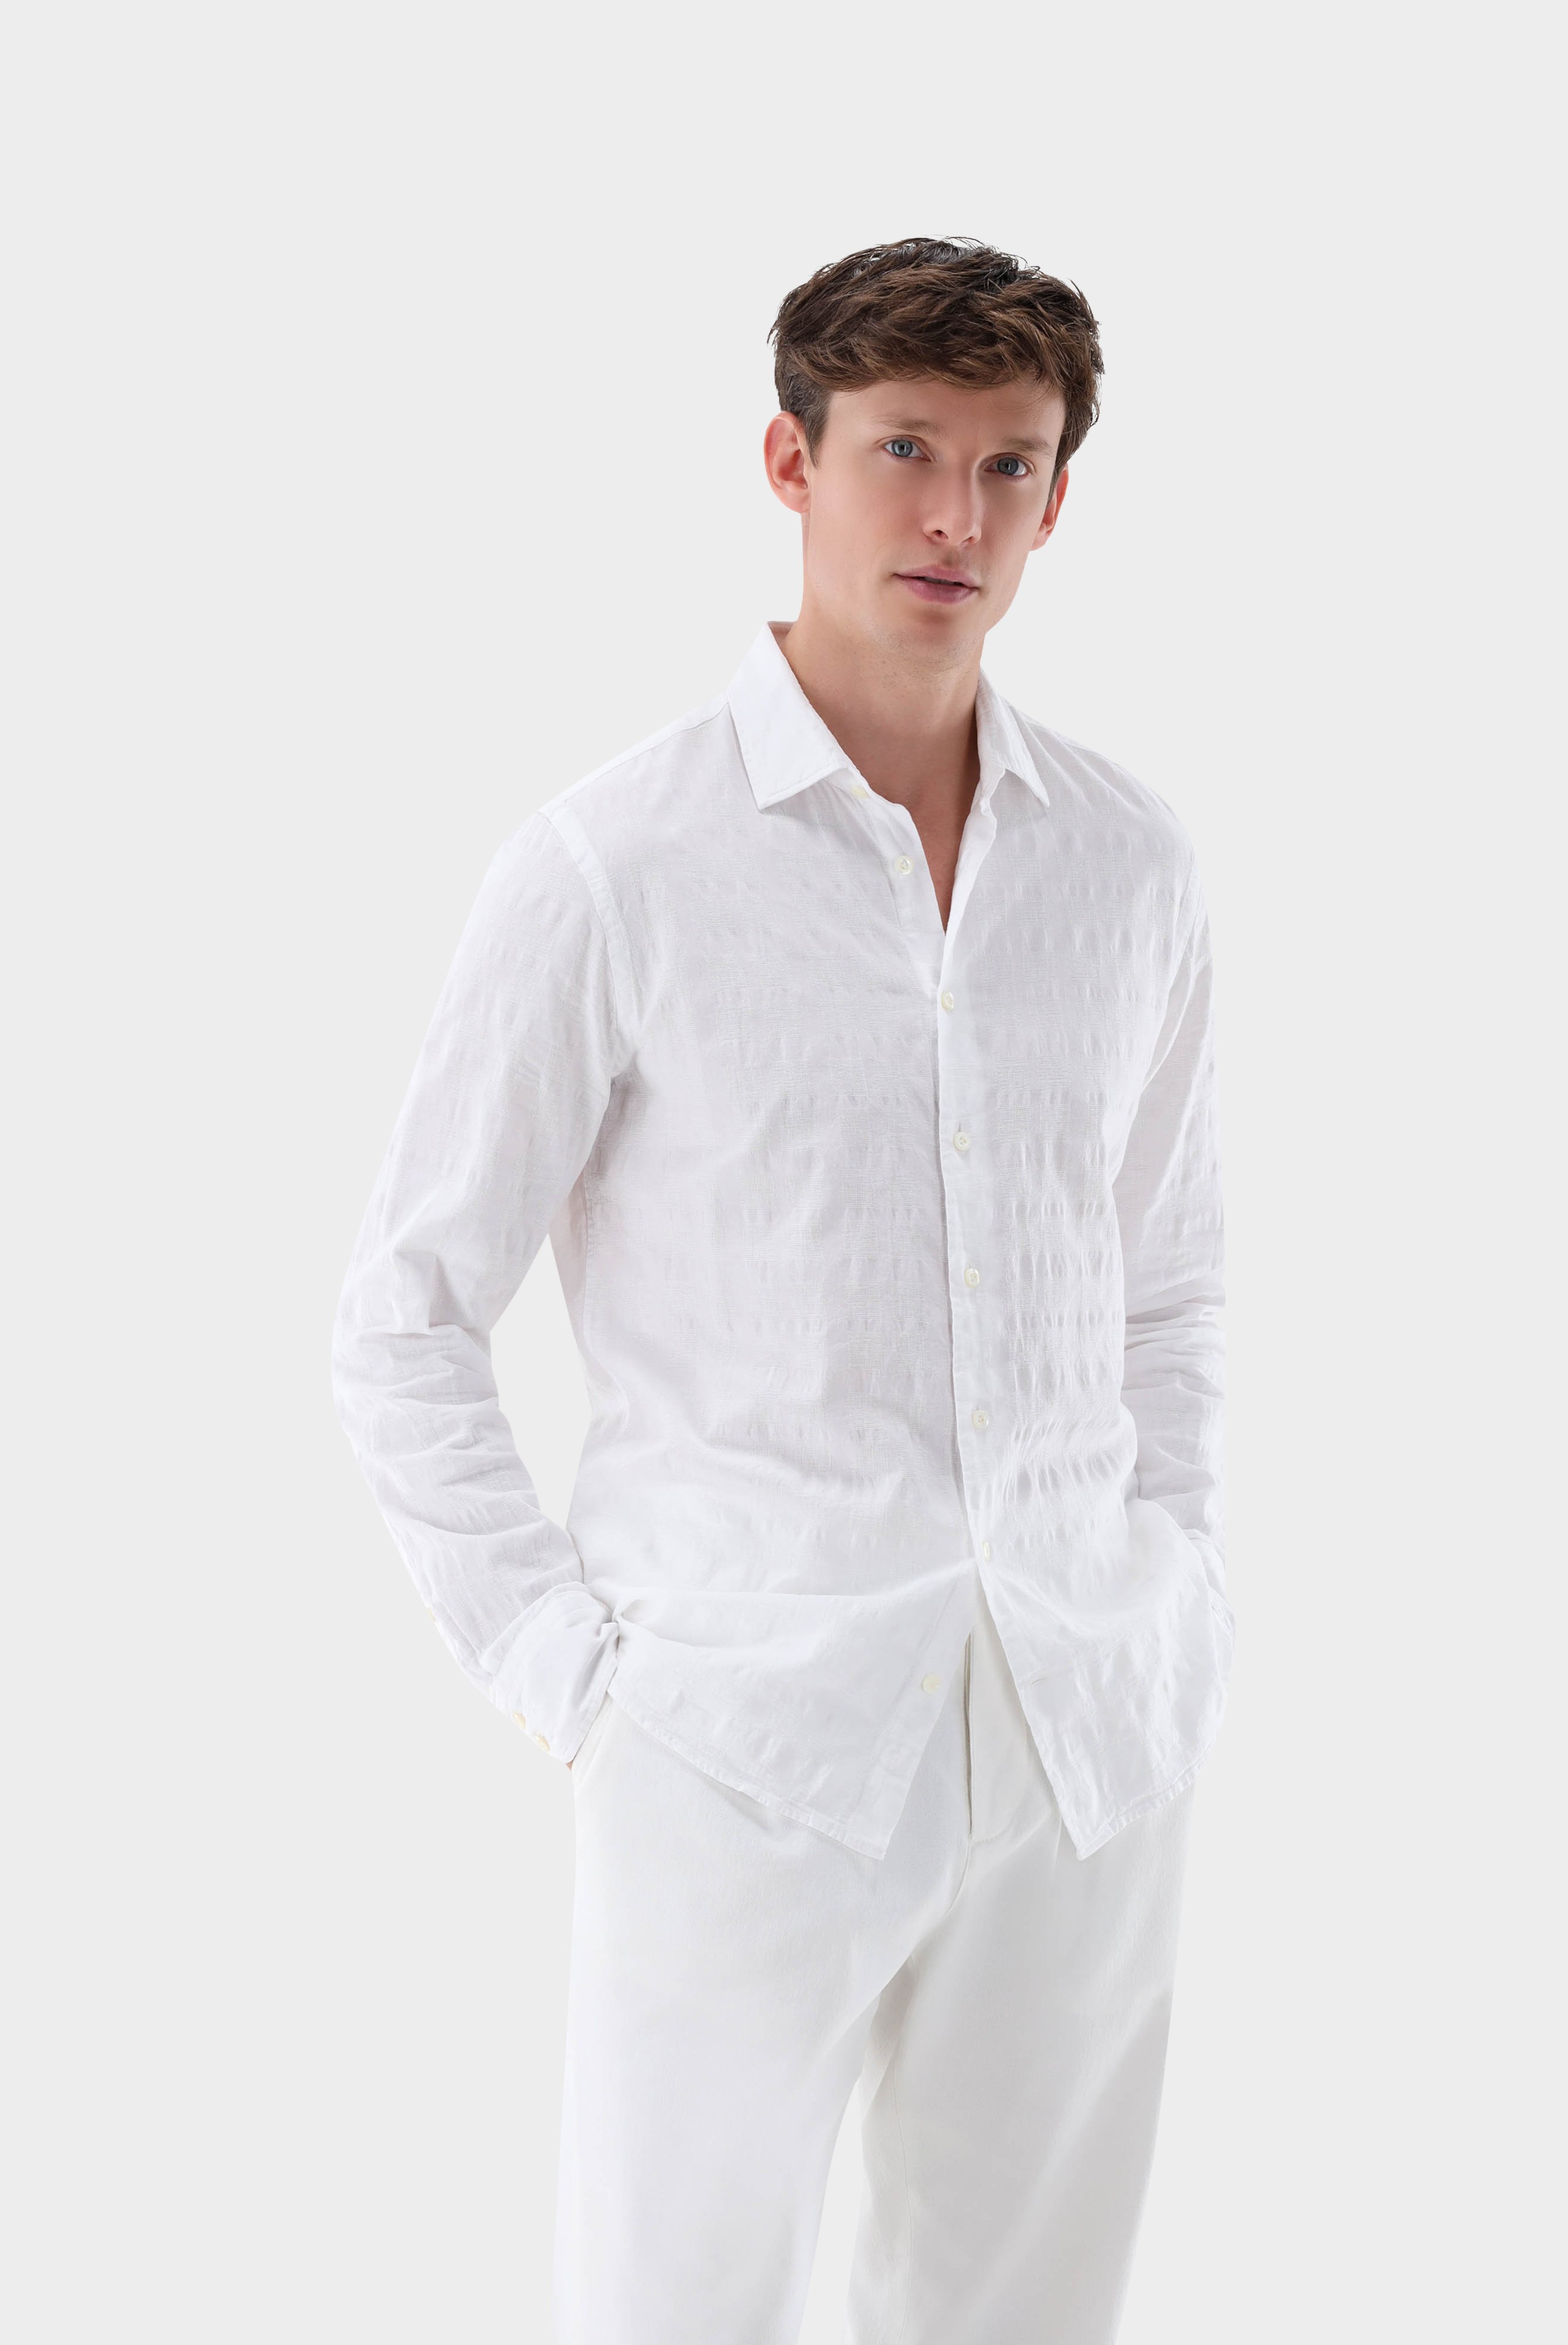 Casual Hemden+Hemd mit Ajouré-Karomuster Tailor Fit+20.2011.EB.150280.000.38